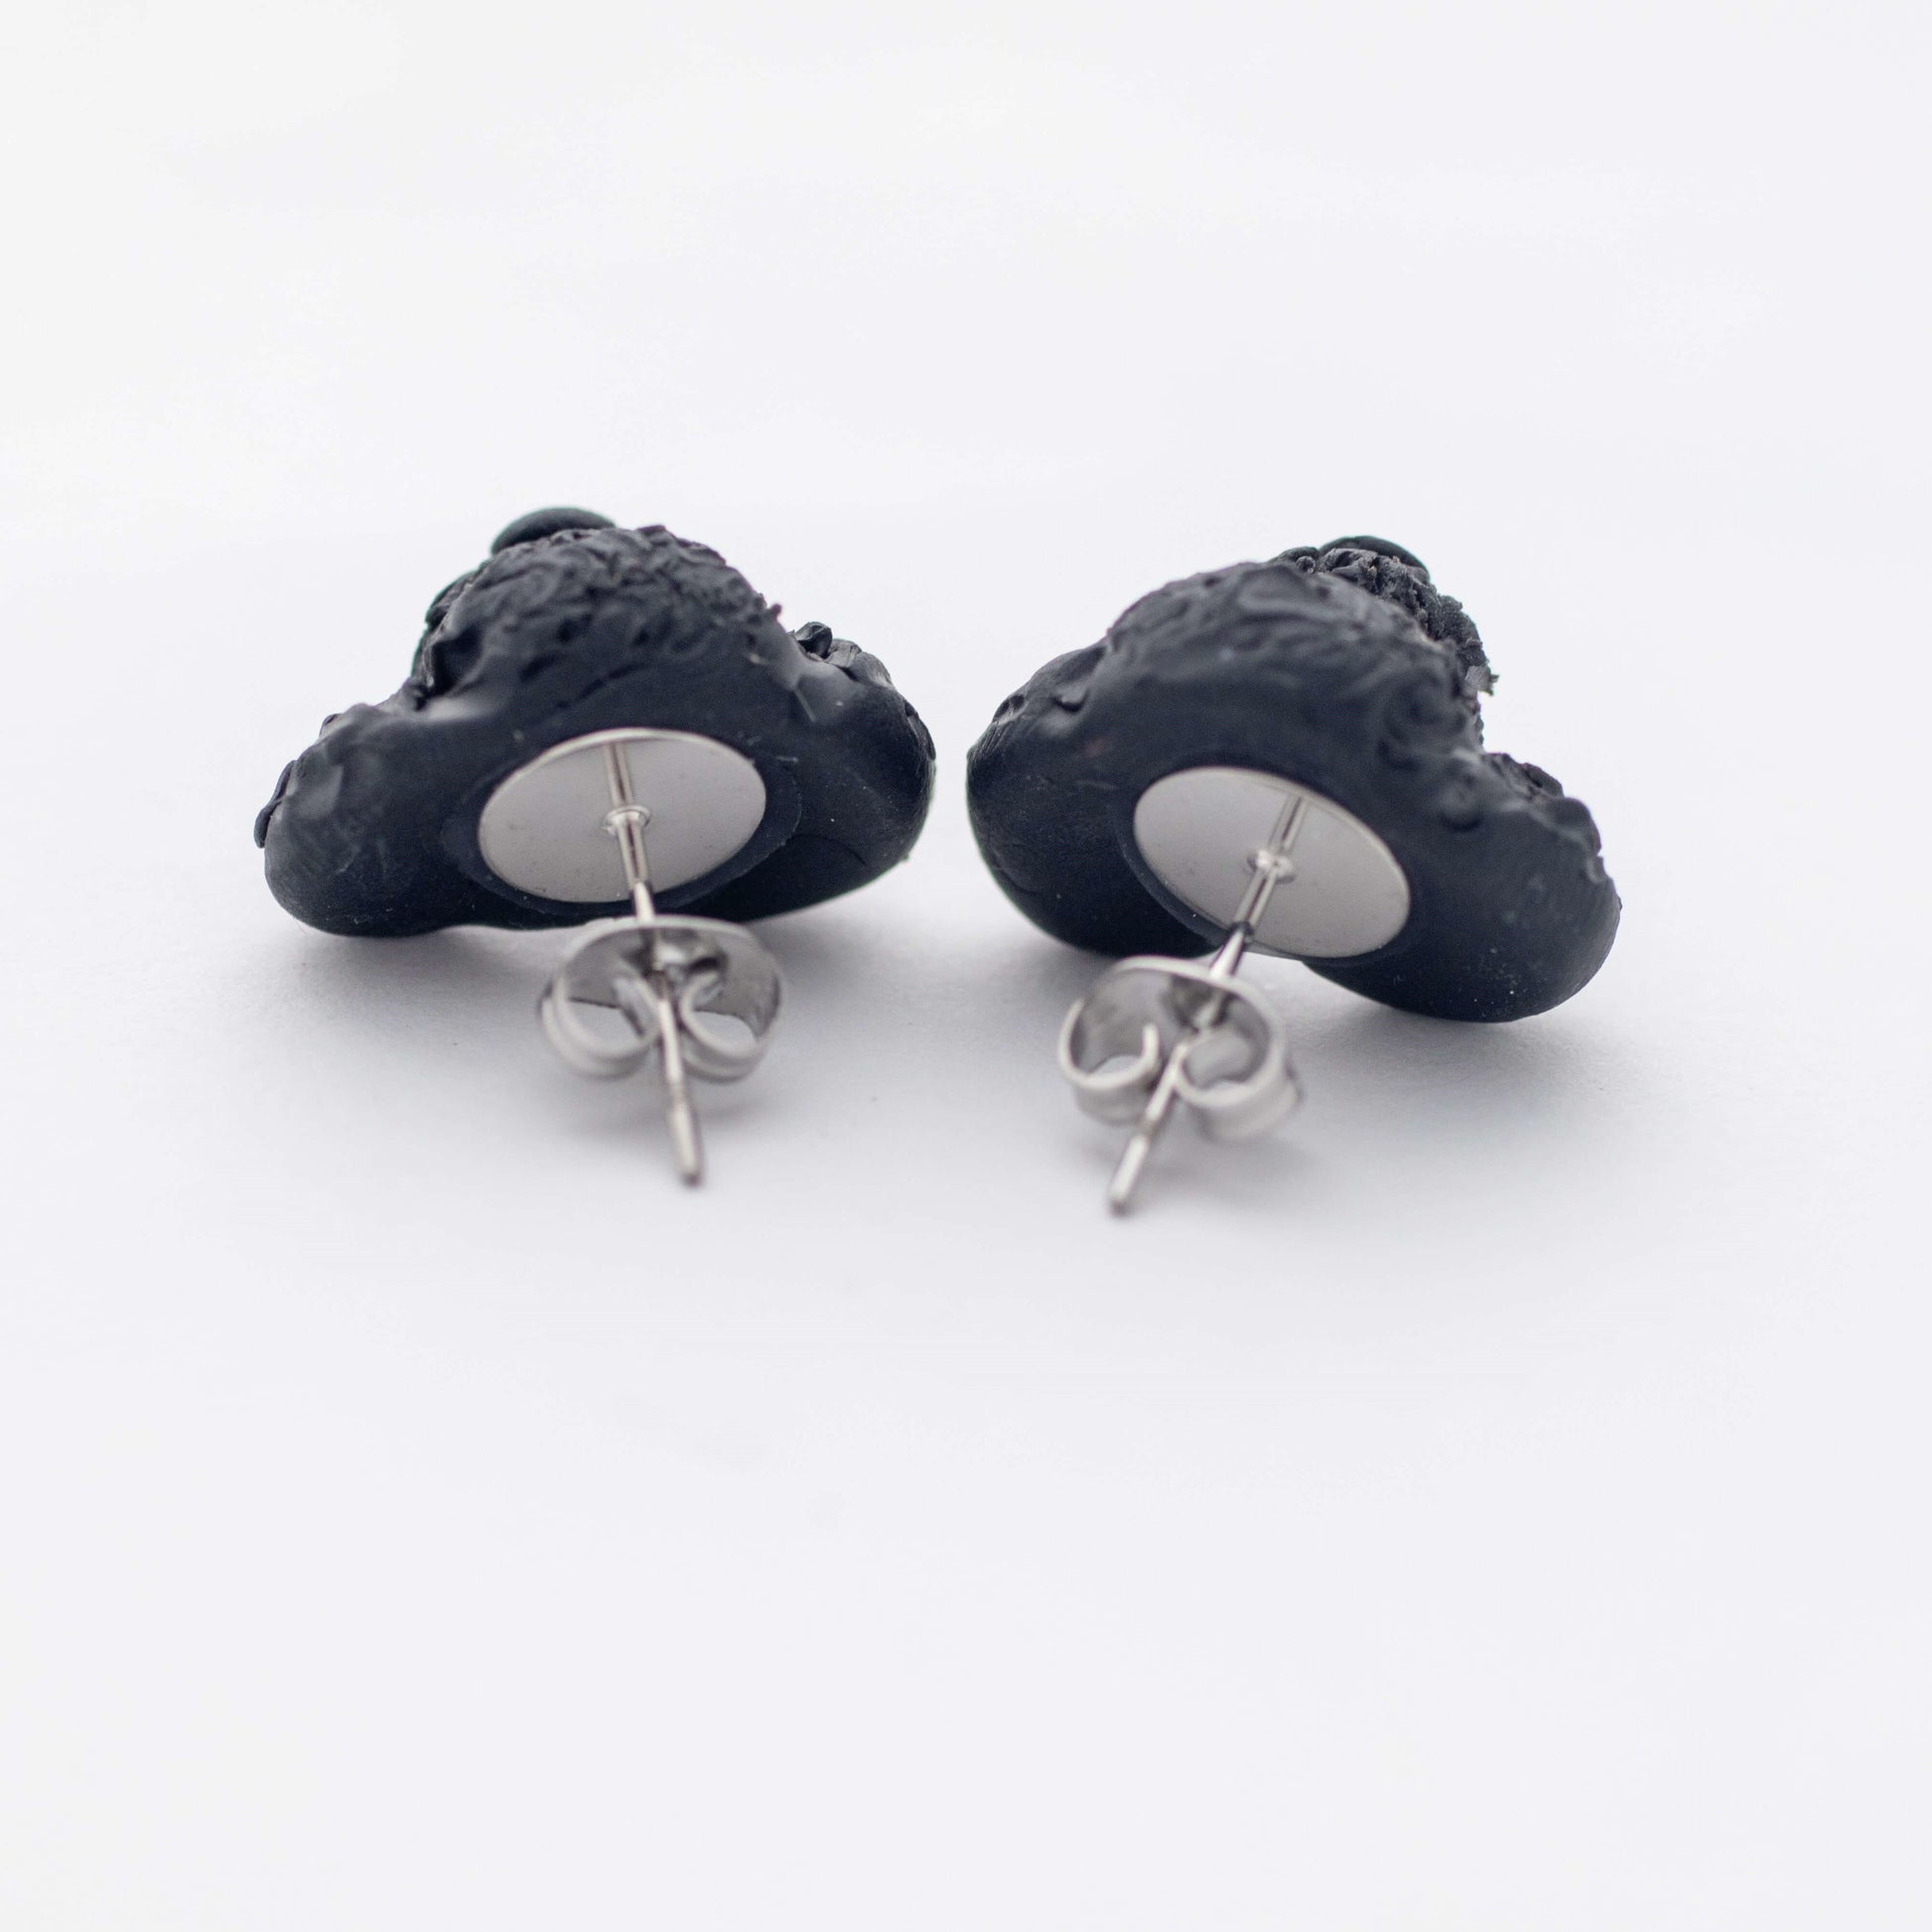 Handmade polymer clay black poodle stud earrings showing surgical steel backs